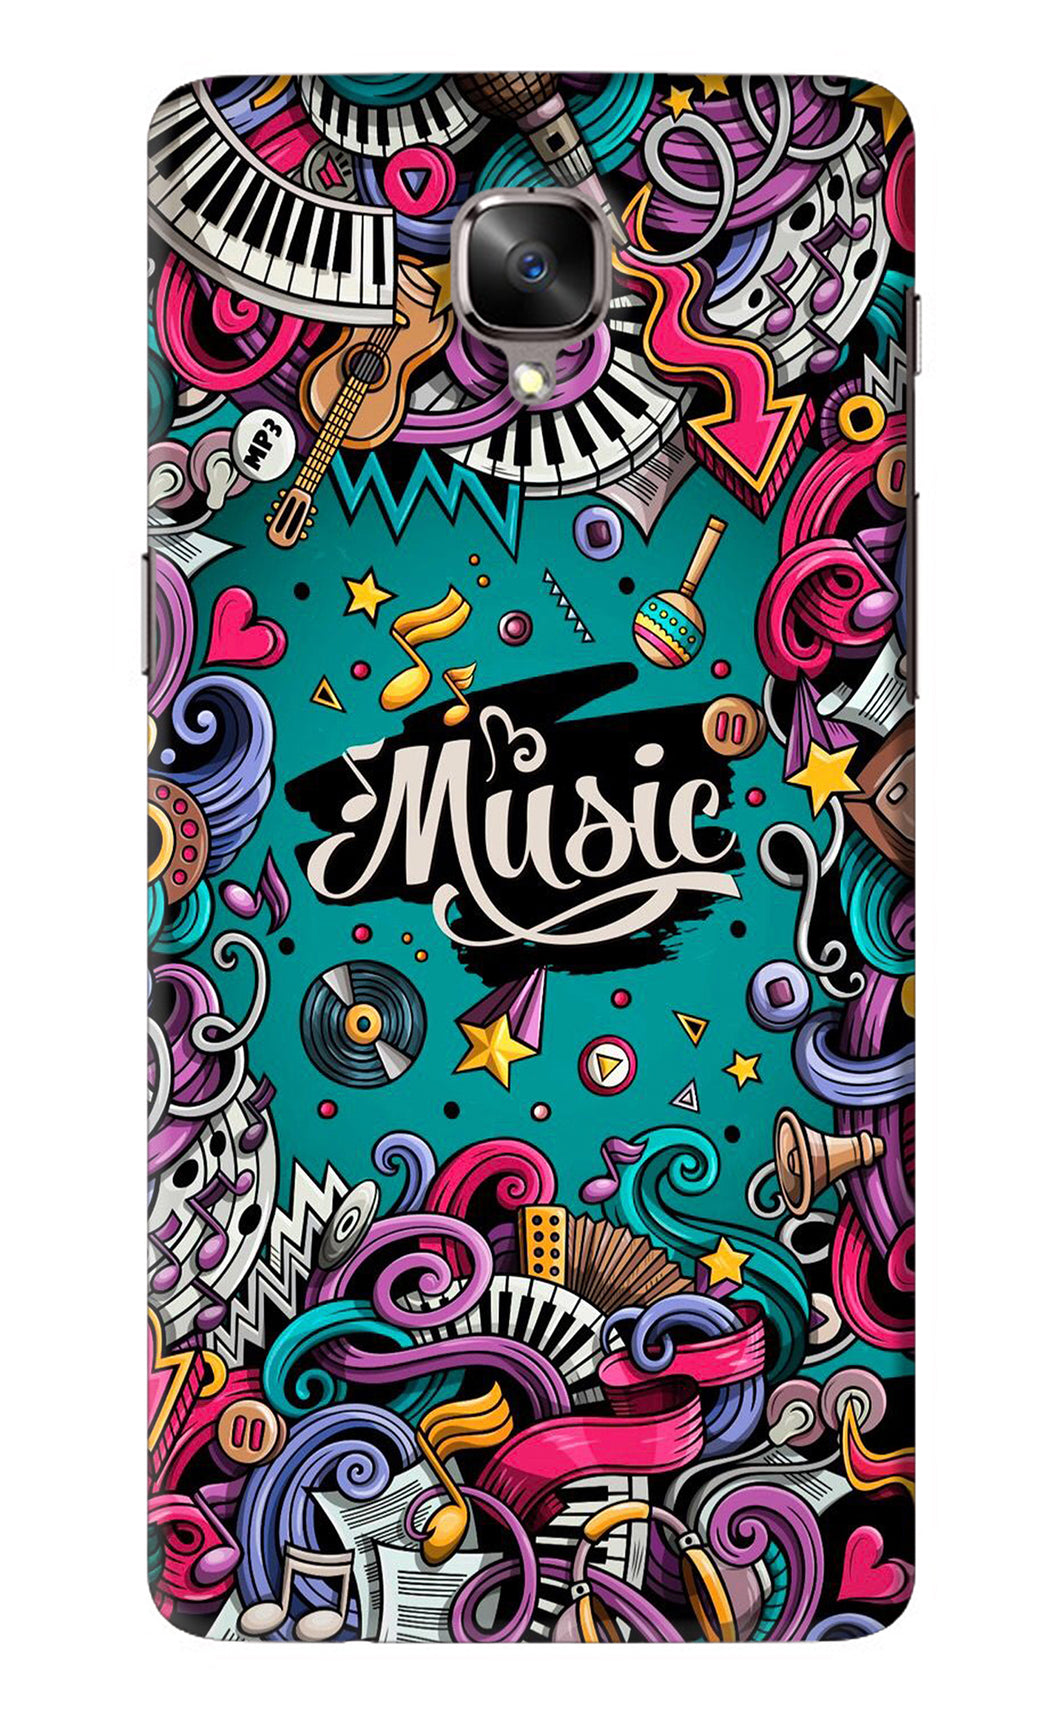 Music Graffiti OnePlus 3T Back Skin Wrap